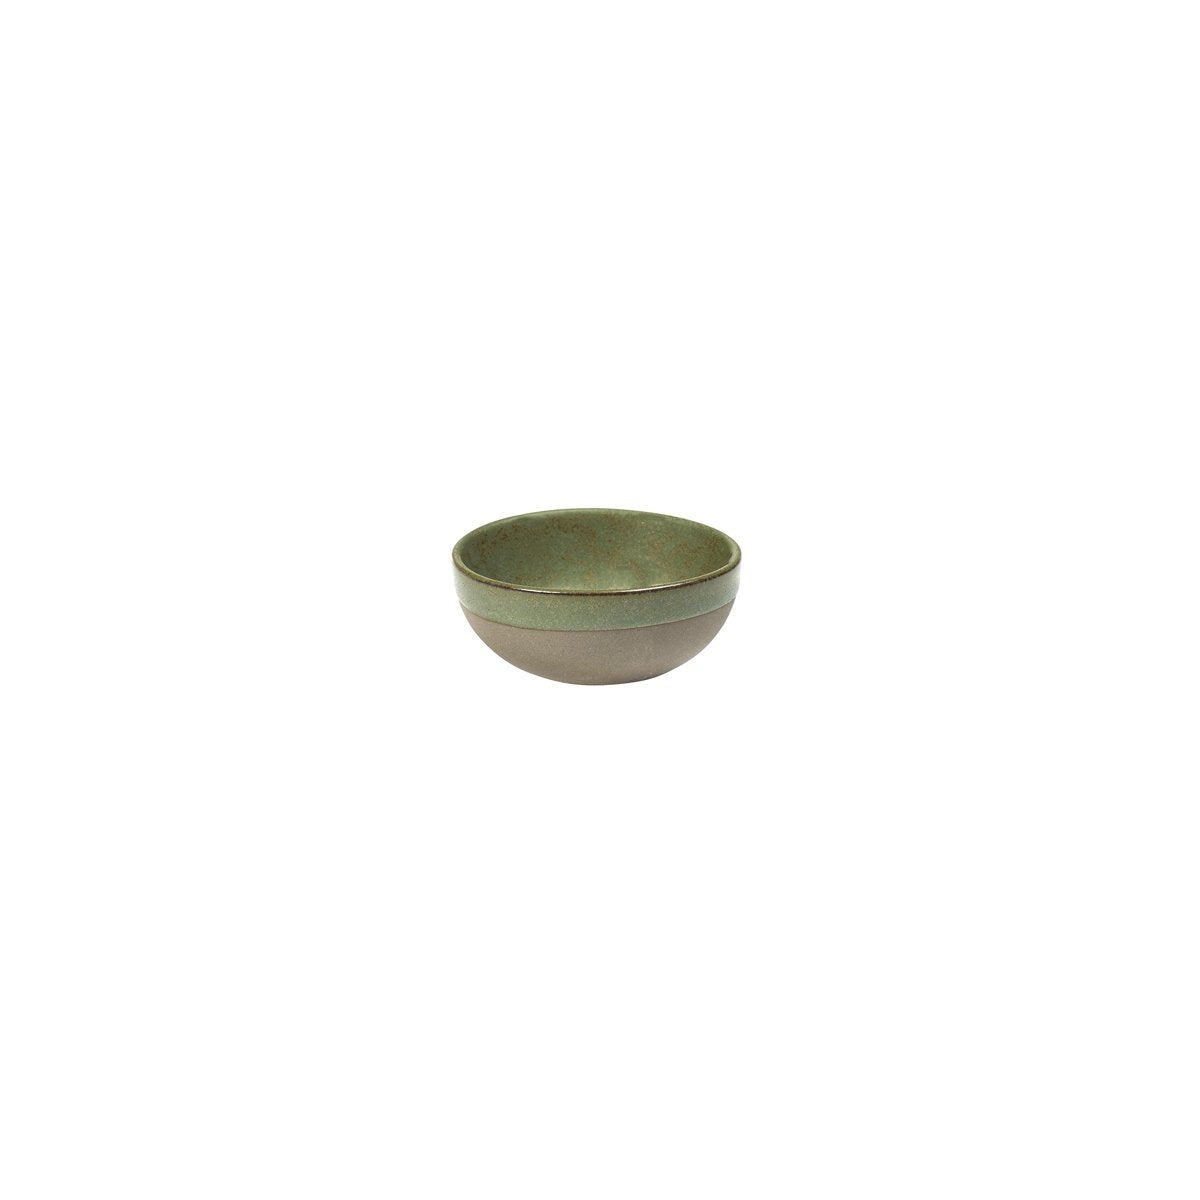 SERAXB5116207A Serax Serax Surface Camo Green Round Bowl 90mm Tomkin Australia Hospitality Supplies